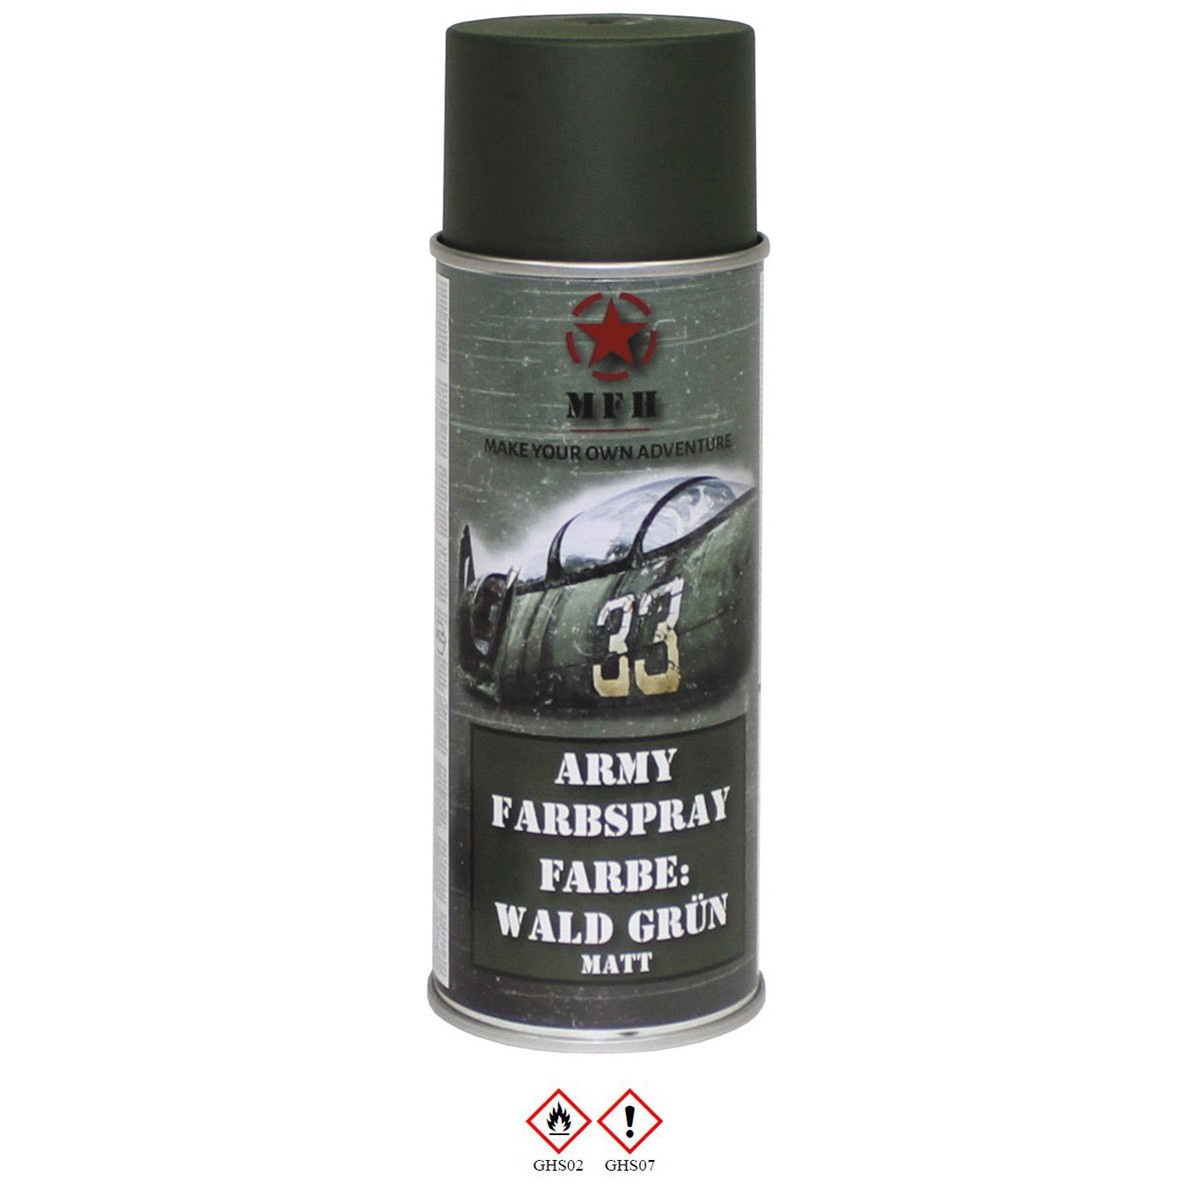 MFH Camouflage Army Paint Spray matt - forest green